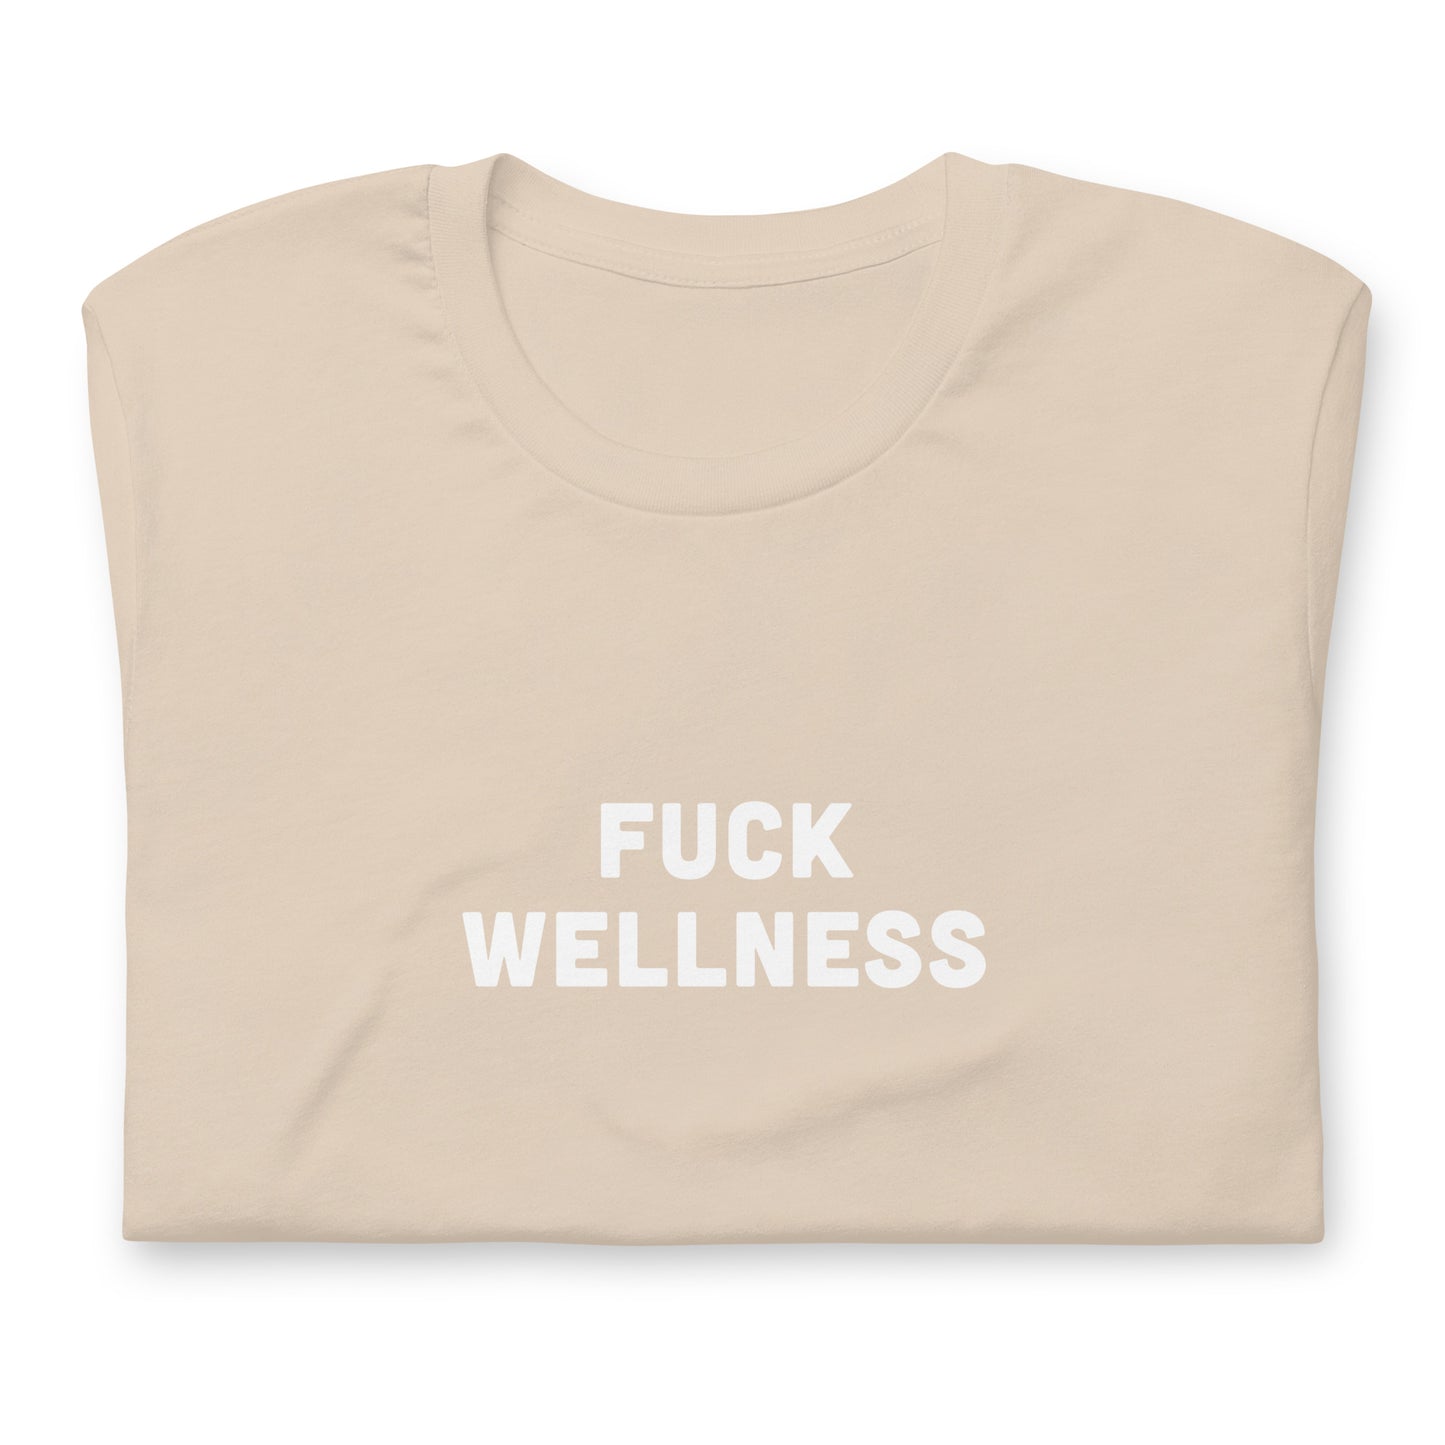 Fuck Wellness T-Shirt Size L Color Asphalt